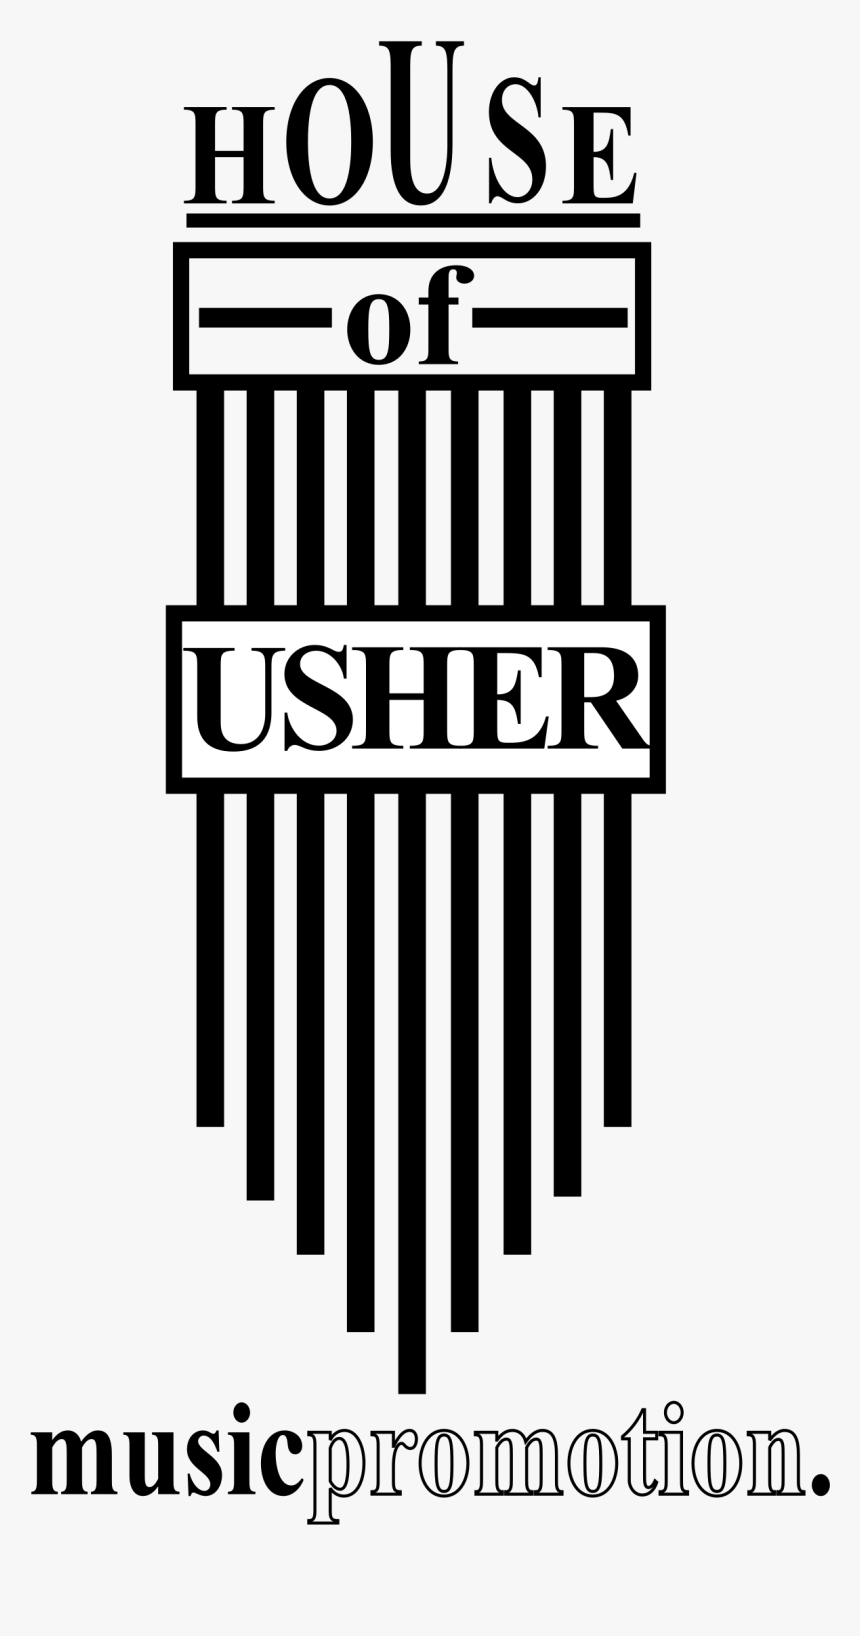 House Of Usher Music Promotion Logo Png Transparent - Usher Perfume, Png Download, Free Download